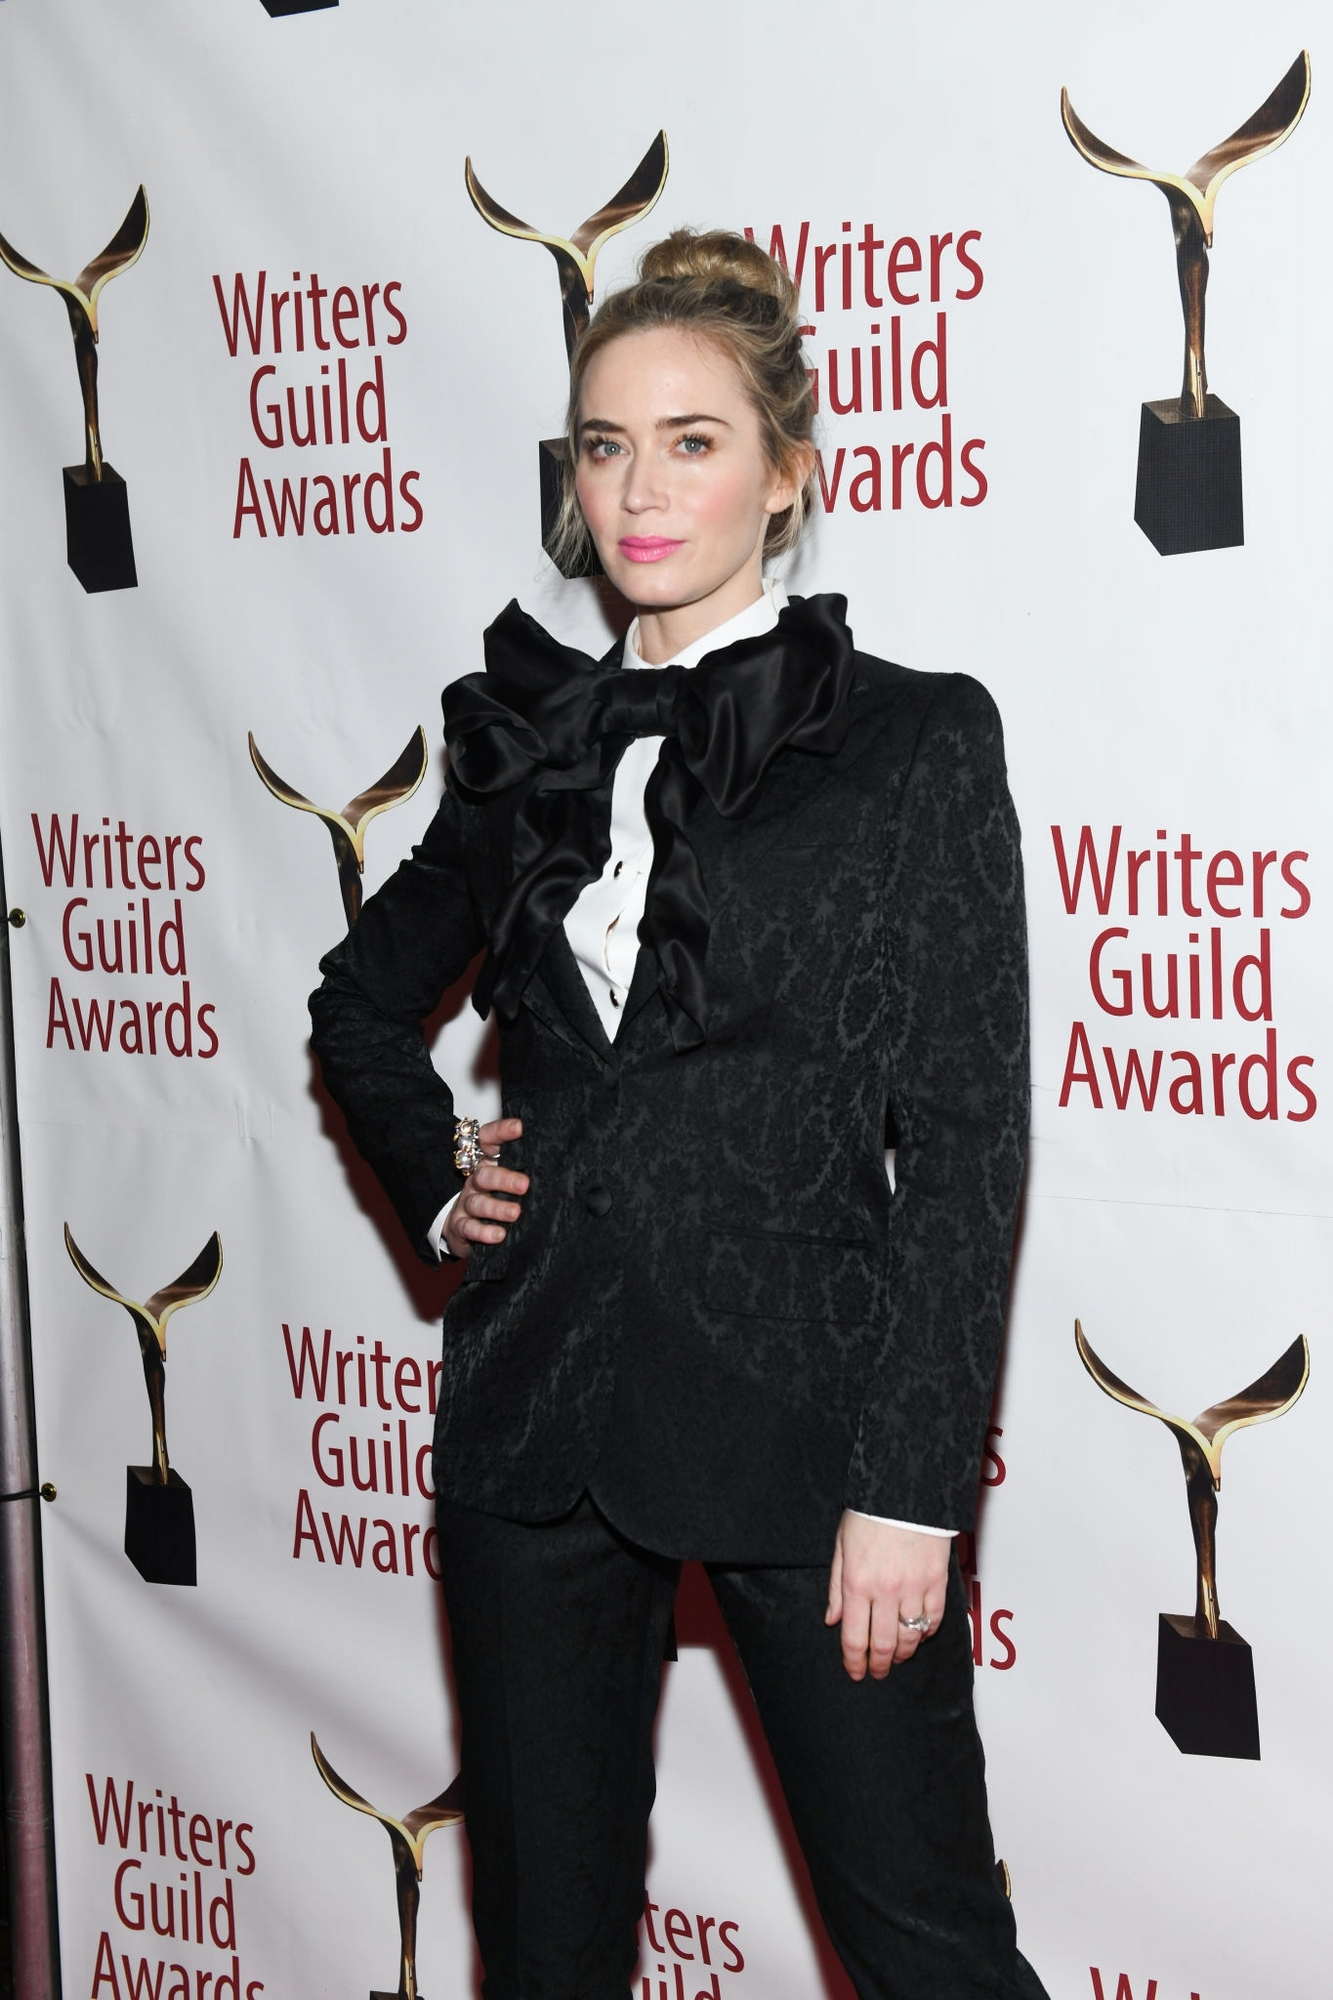 Emily_Blunt_-_71st_Annual_Writers_Guild_Awards_New_York_Ceremomy_-_Feb_17th2.jpg